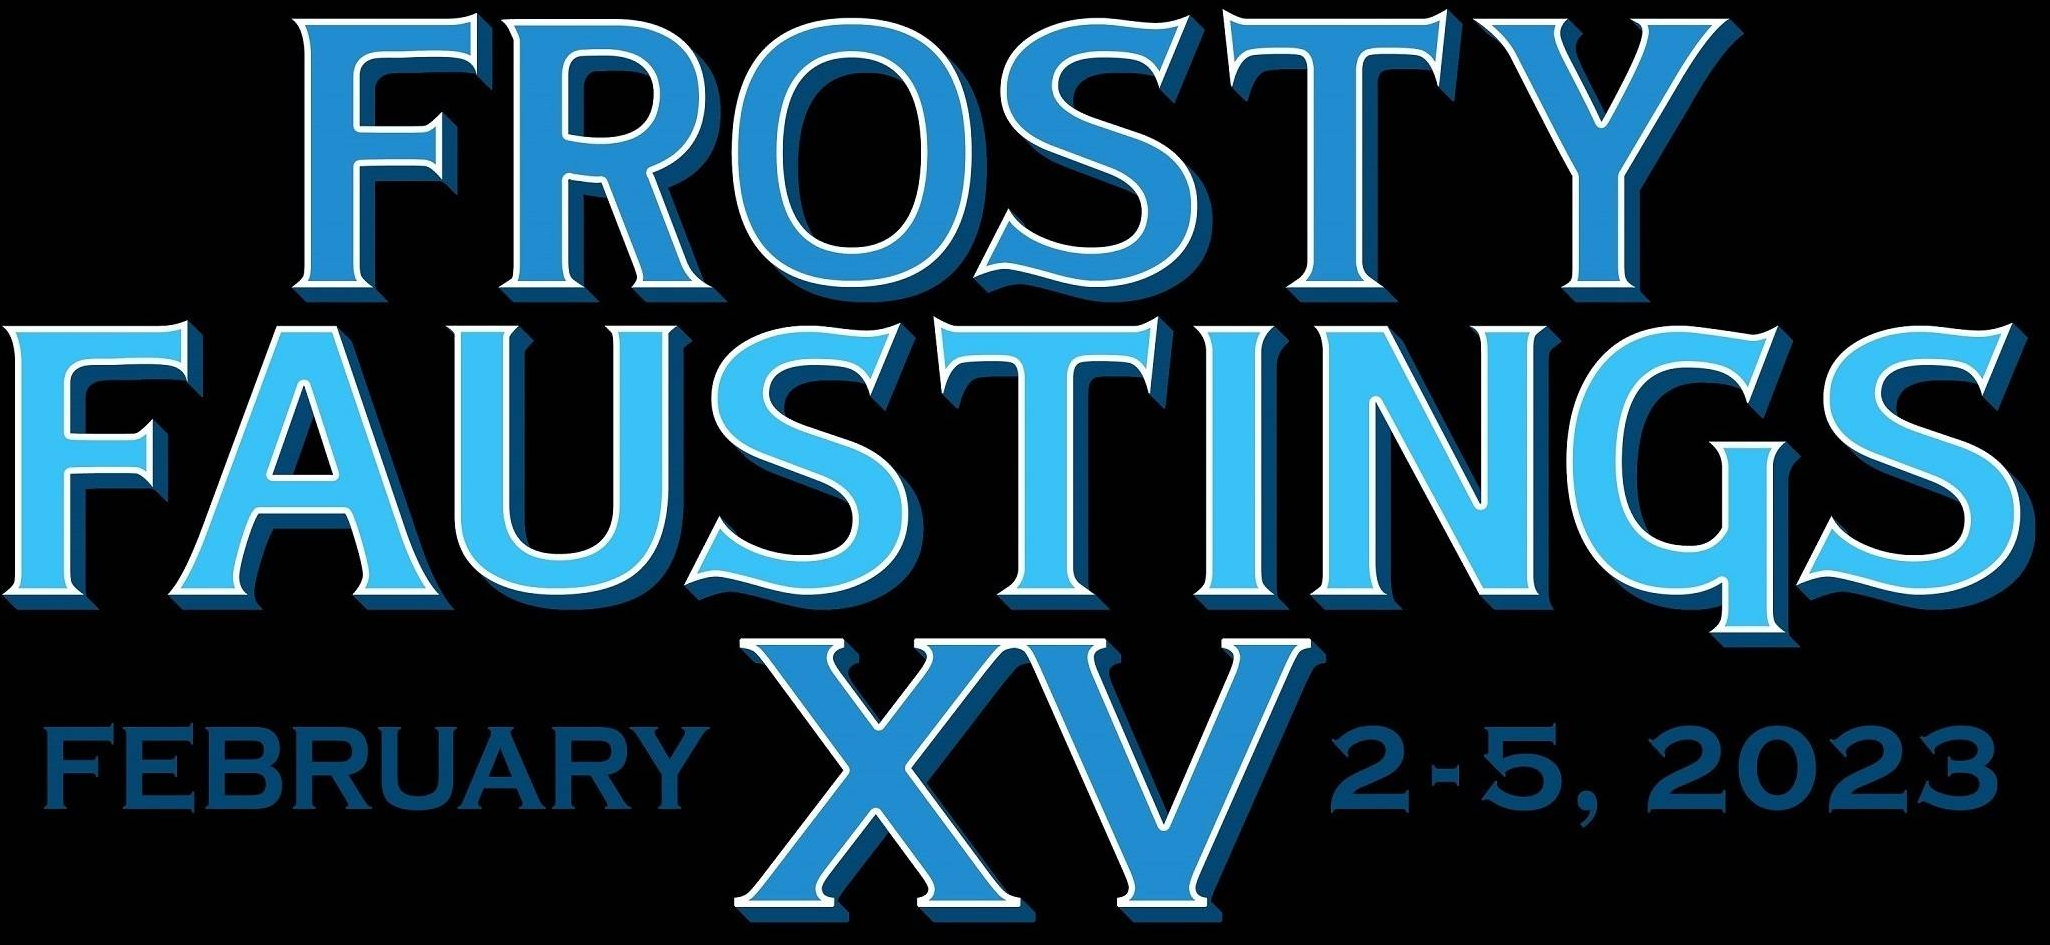 Frosty Faustings 2023